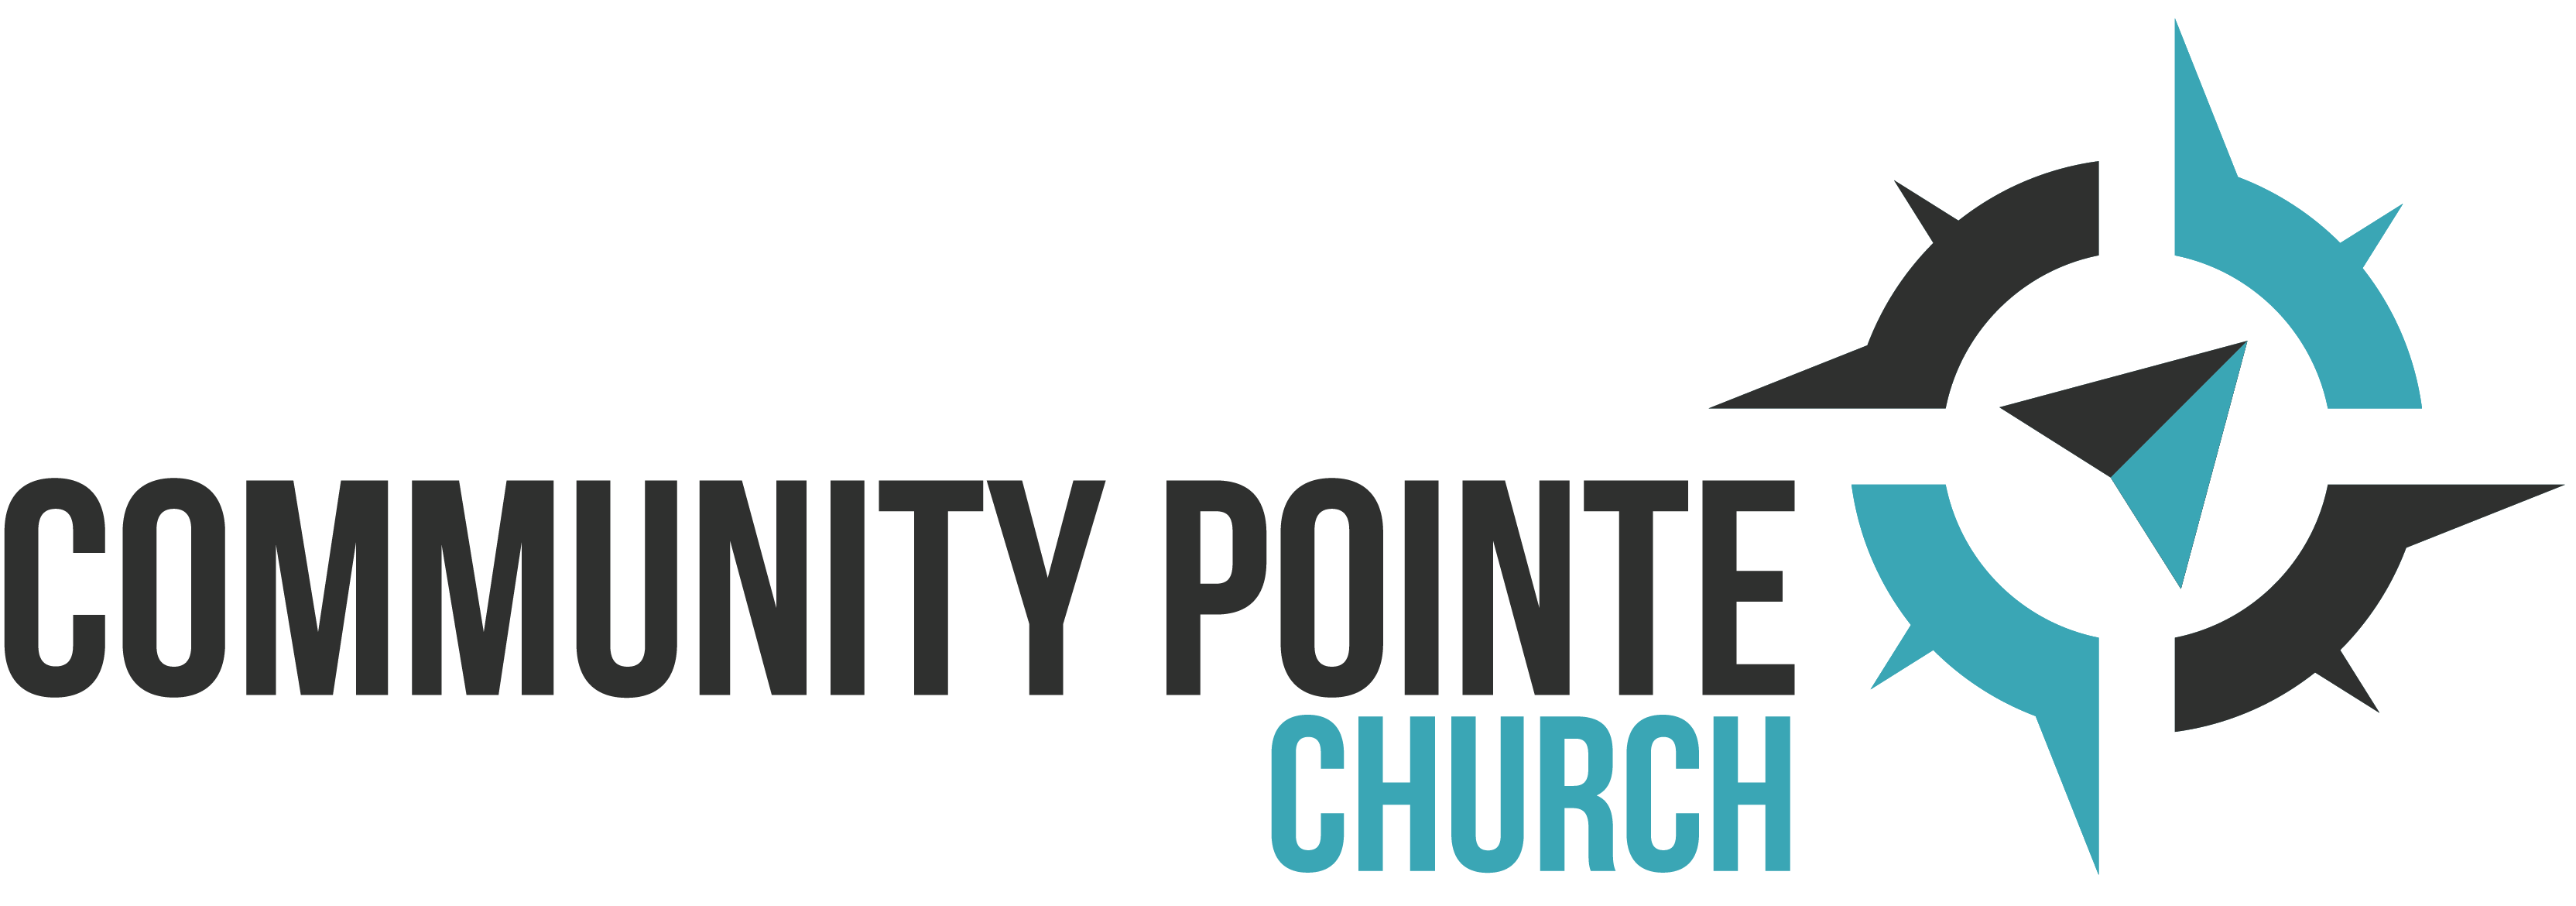 Community Pointe Church